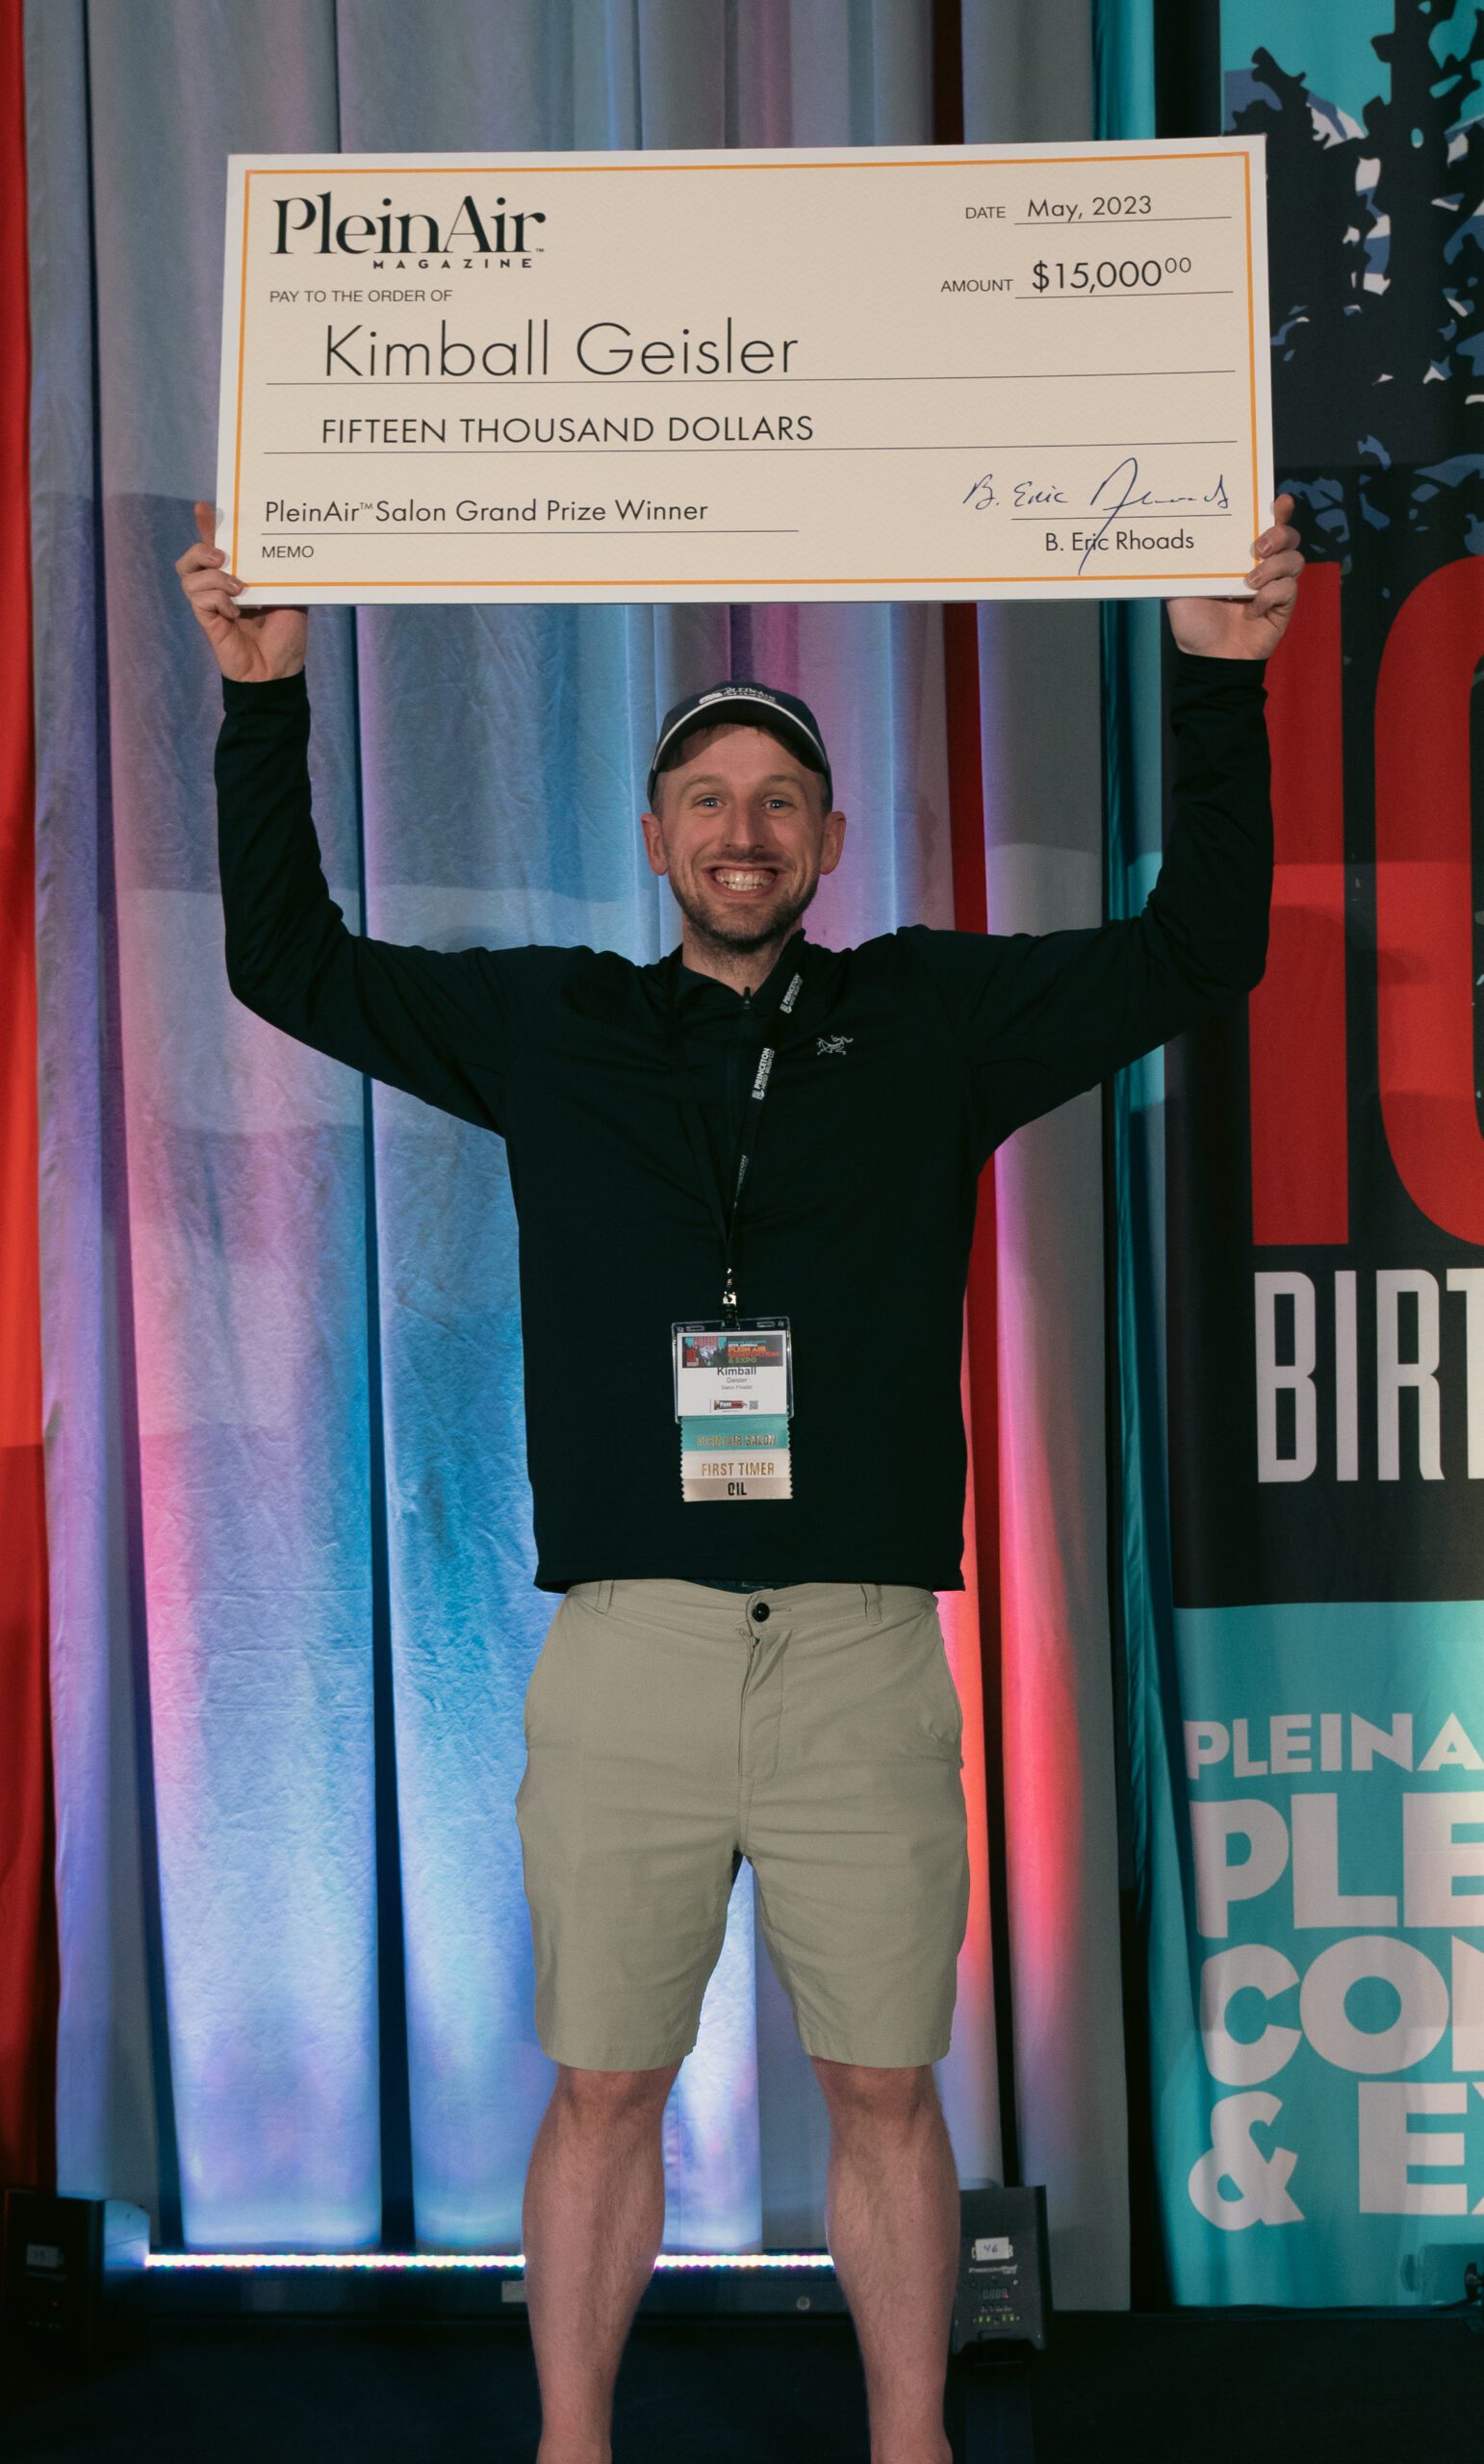 12th Annual PleinAir salon Online Art Competition Grand Prize Winner Kimball Geisler holding his $15,000 check